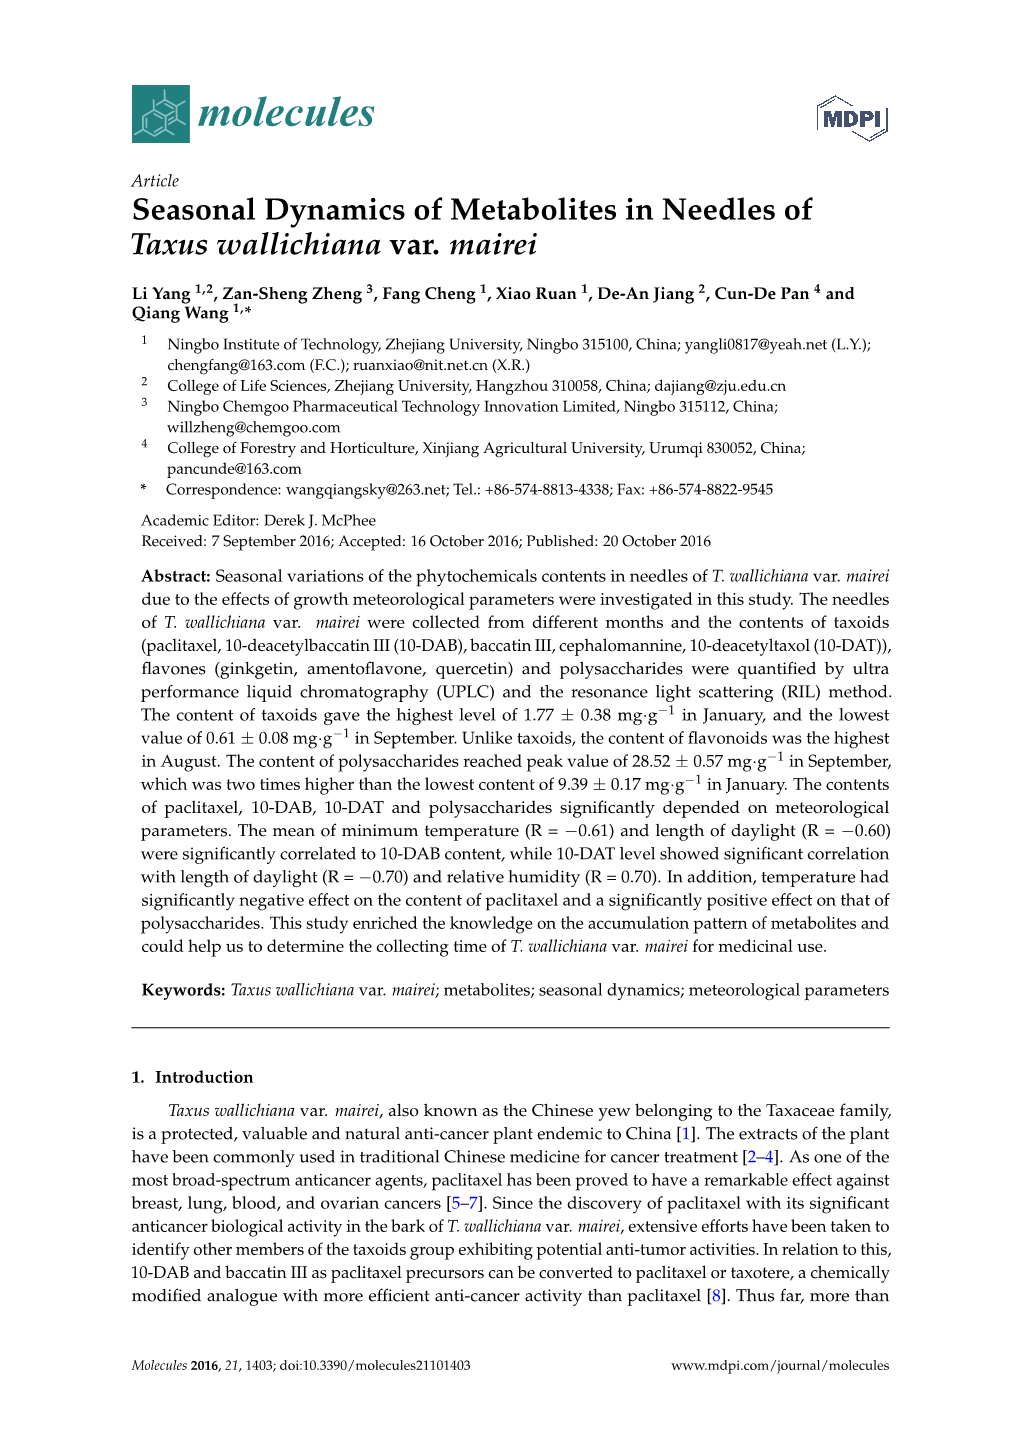 Seasonal Dynamics of Metabolites in Needles of Taxus Wallichiana Var